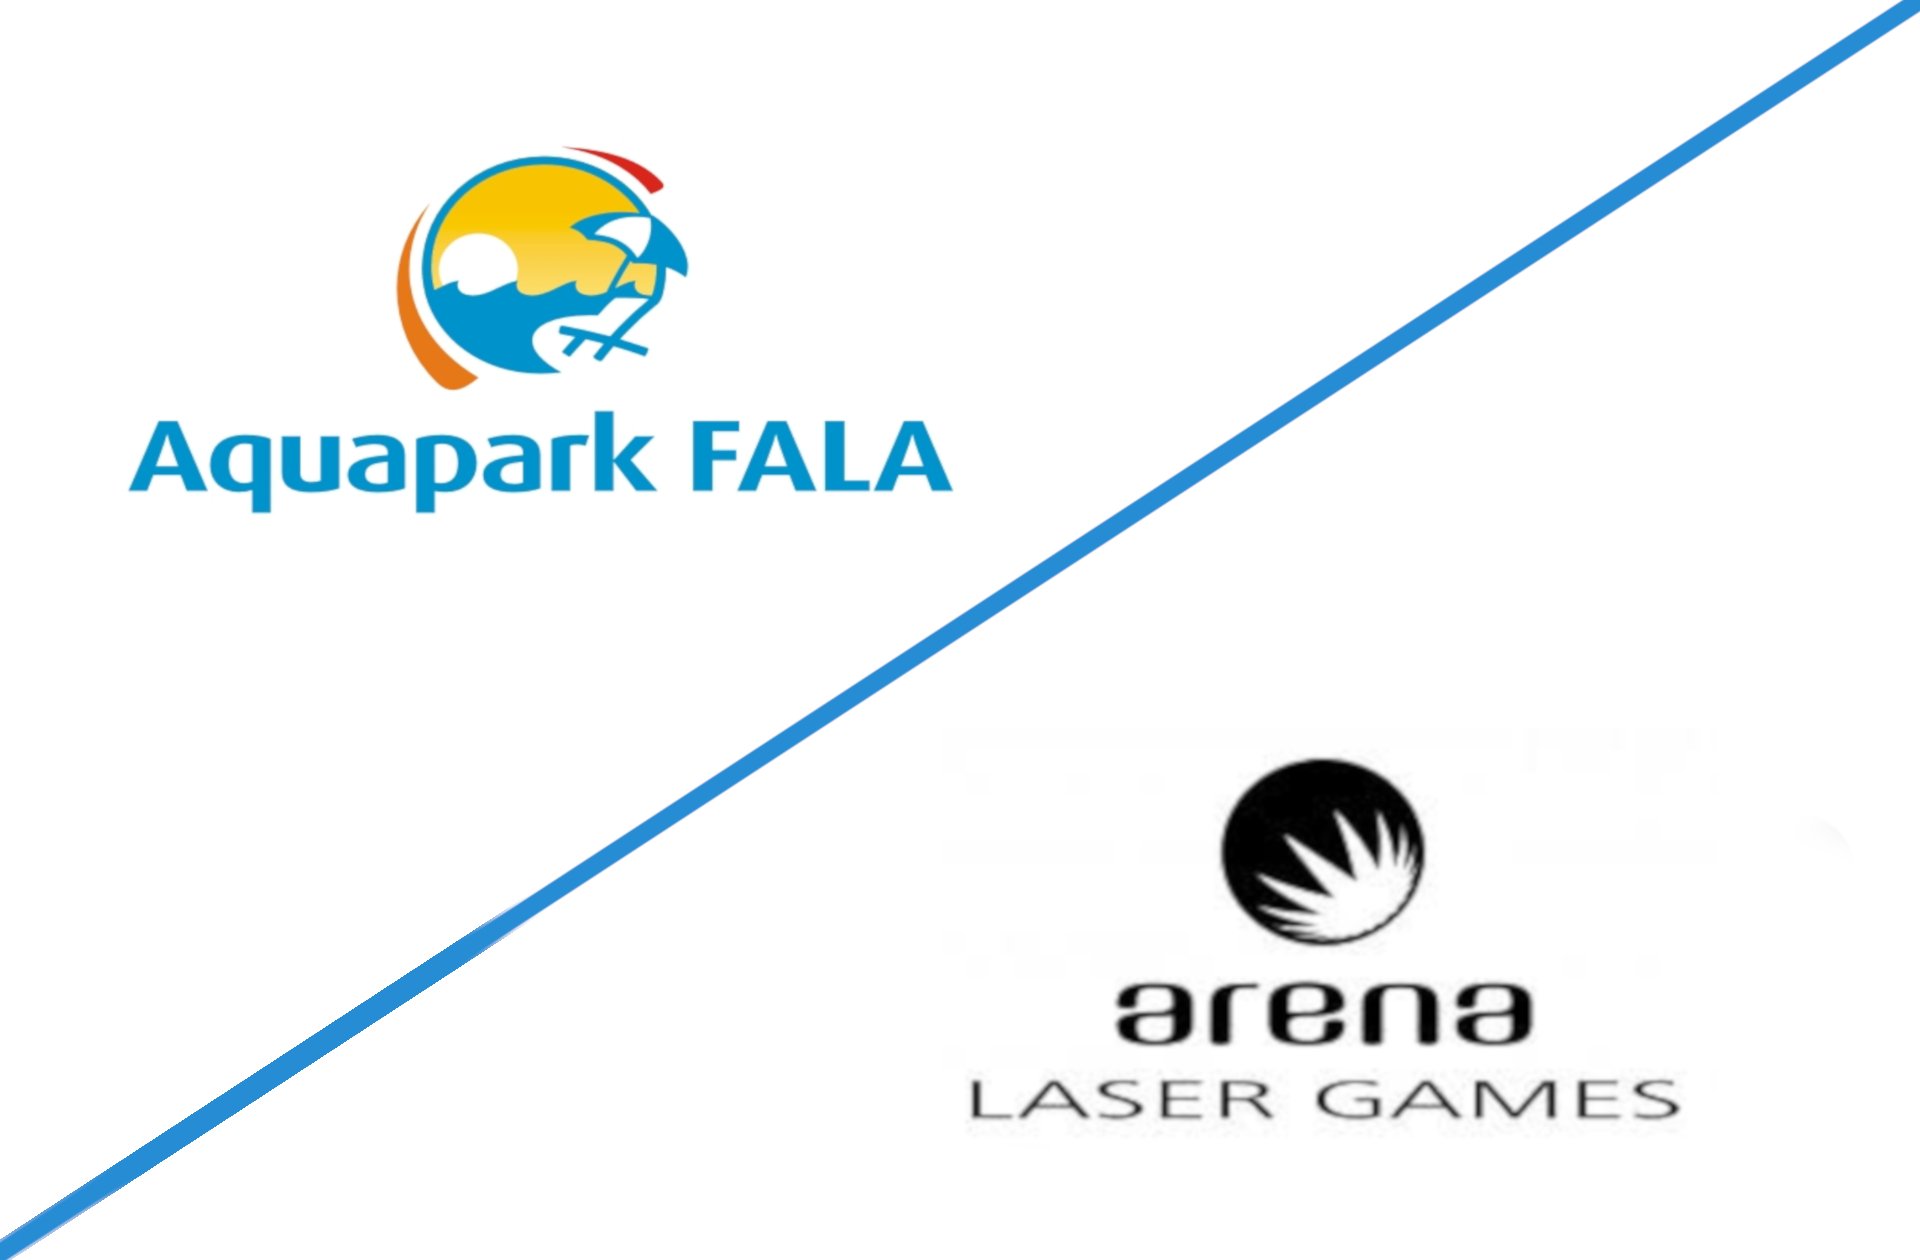 Logotypy Aquaparku FALA oraz Arena Laser Games. , Logotypy Aquaparku FALA oraz Arena Laser Games.